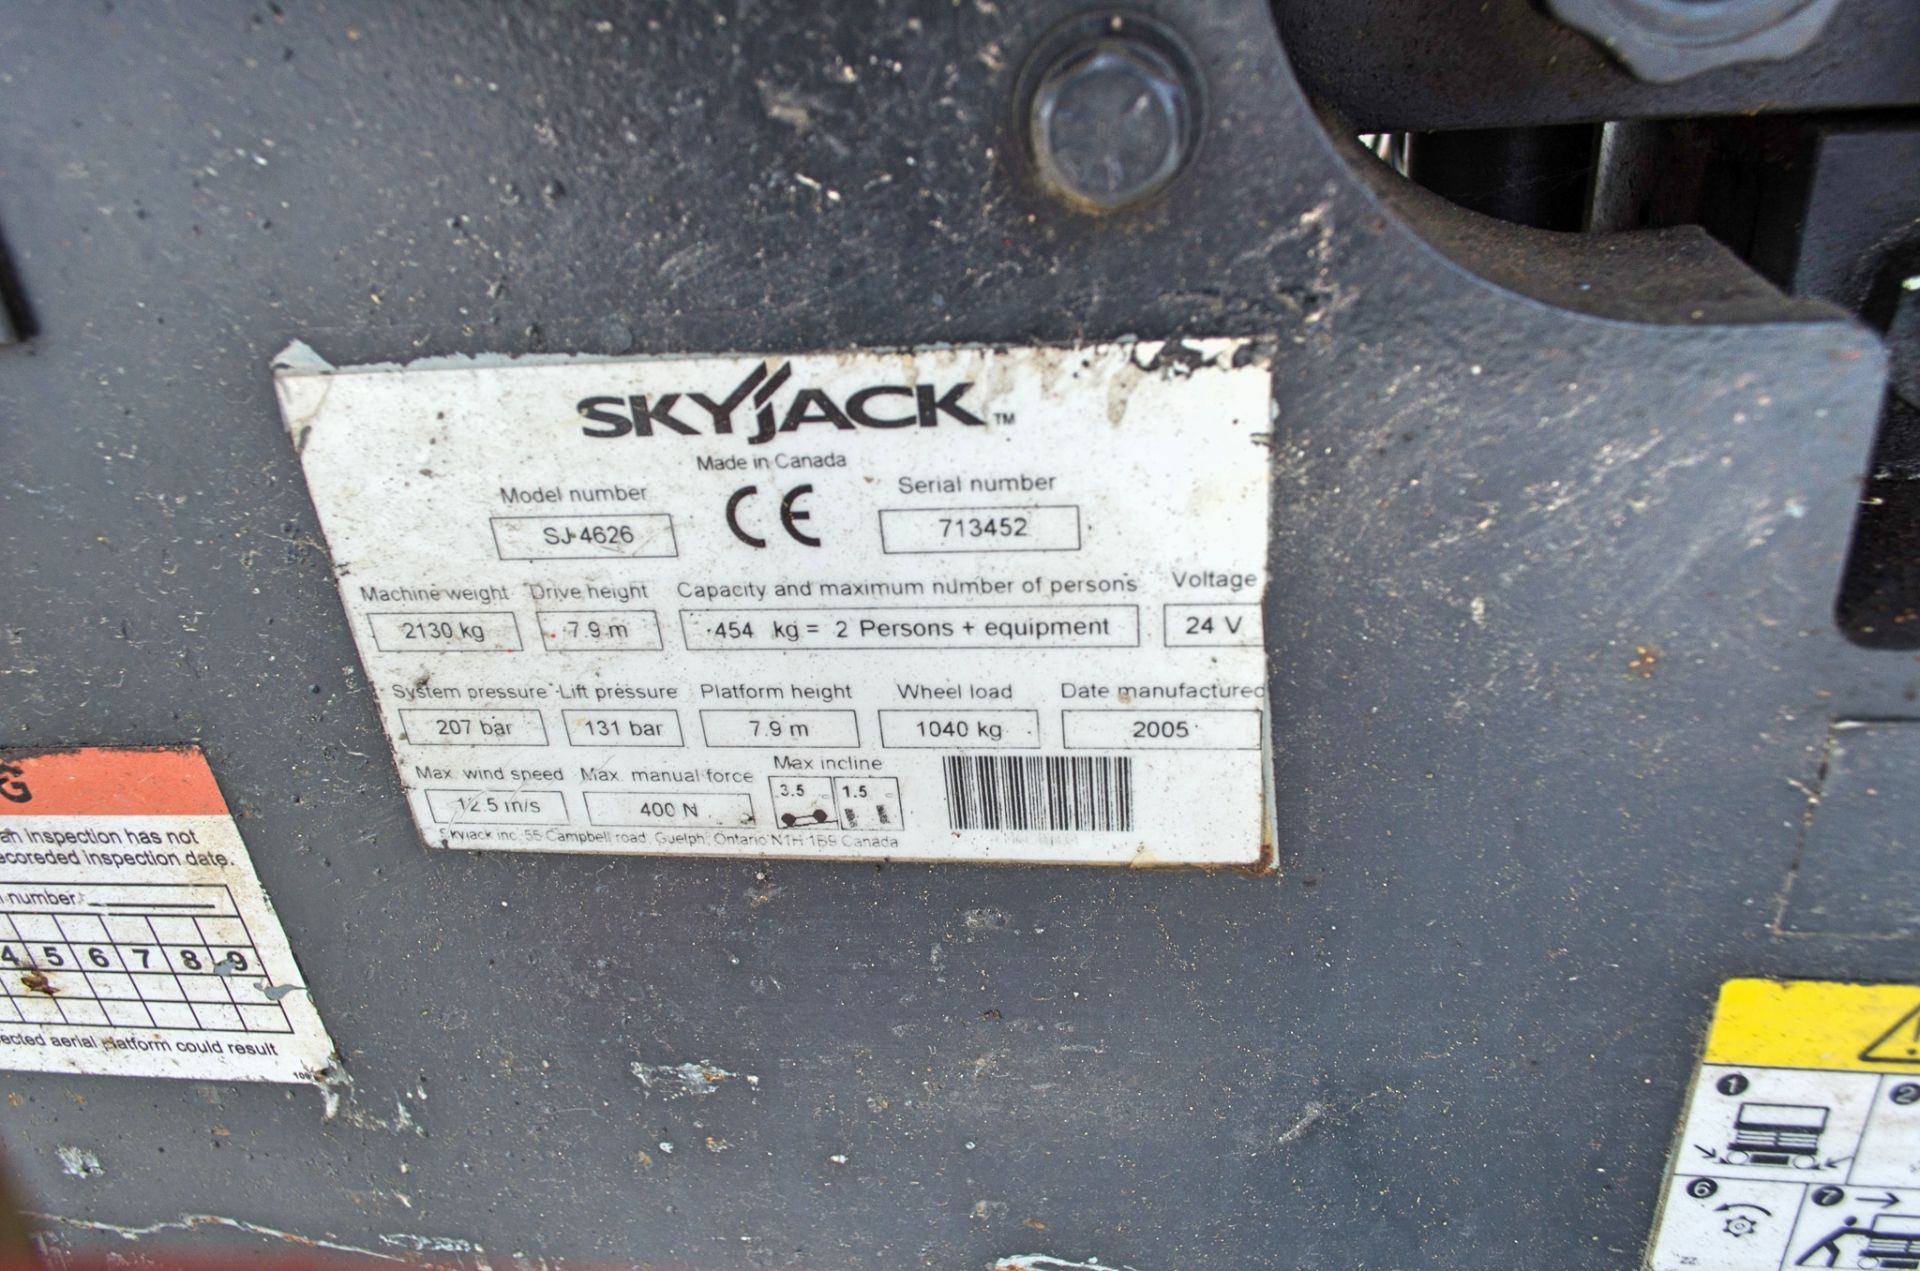 Skyjack SJ4626 battery electric scissor lift Year: 2005 S/N: 713452 R1332 - Image 10 of 10